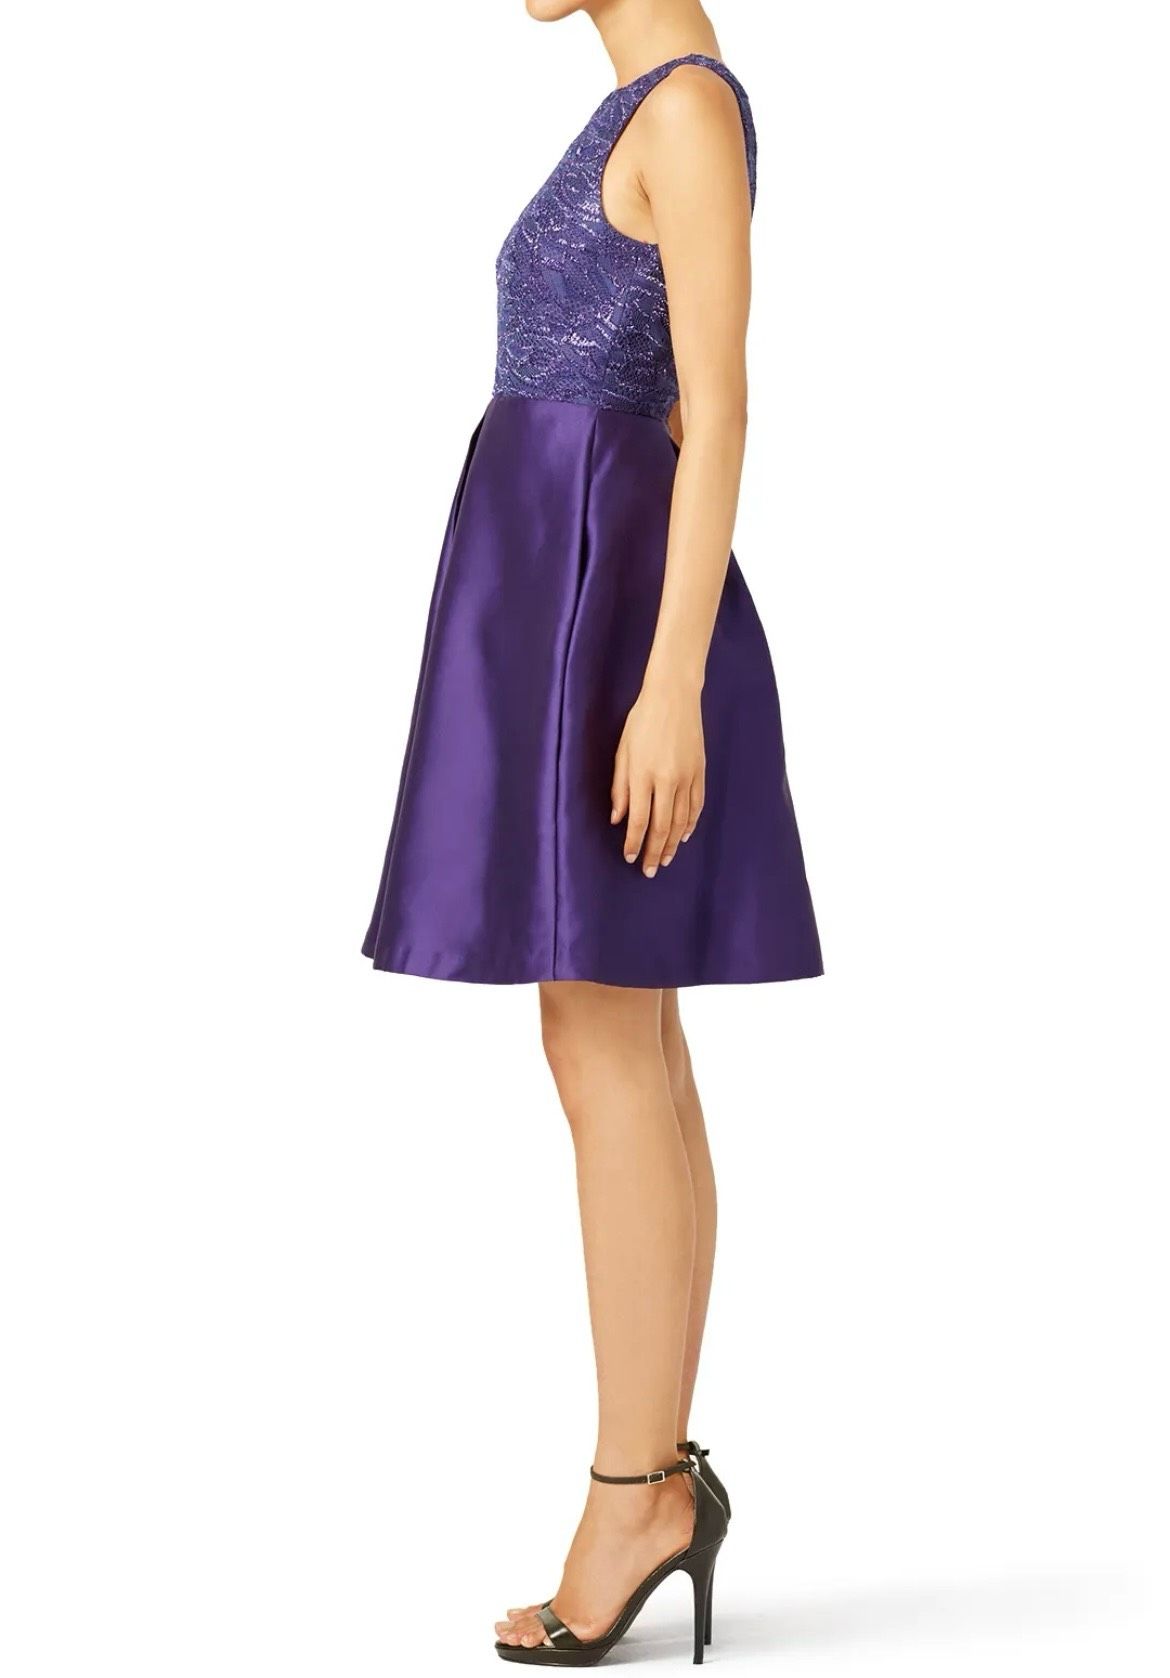 Monique Lhuillier Size 0 Pageant High Neck Purple Cocktail Dress on Queenly